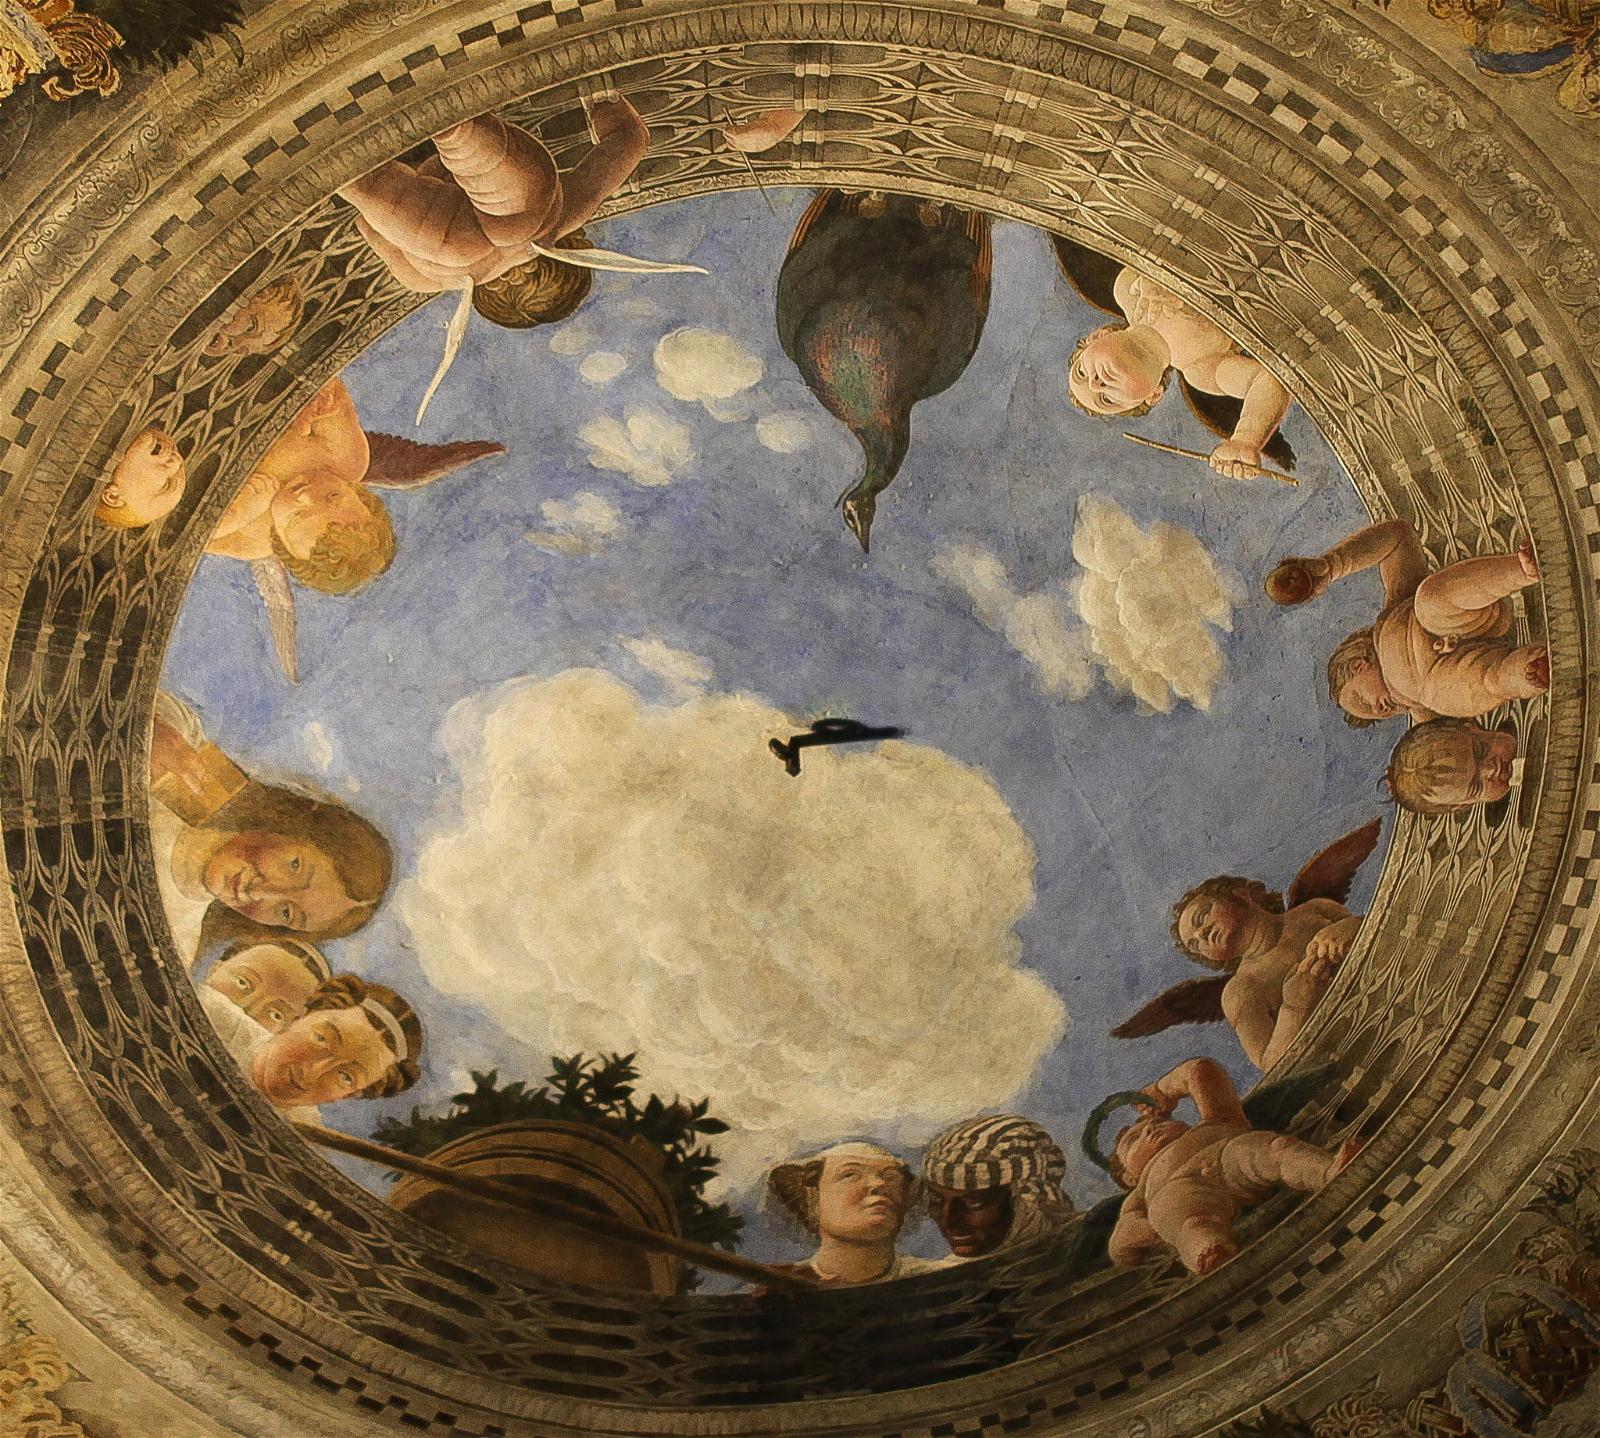 Castello di San Giorgio görüntü. italy castle painting italia mantova castello mantua mantegna lombardy andreamantegna castellodisangiorgio ceilingpainting